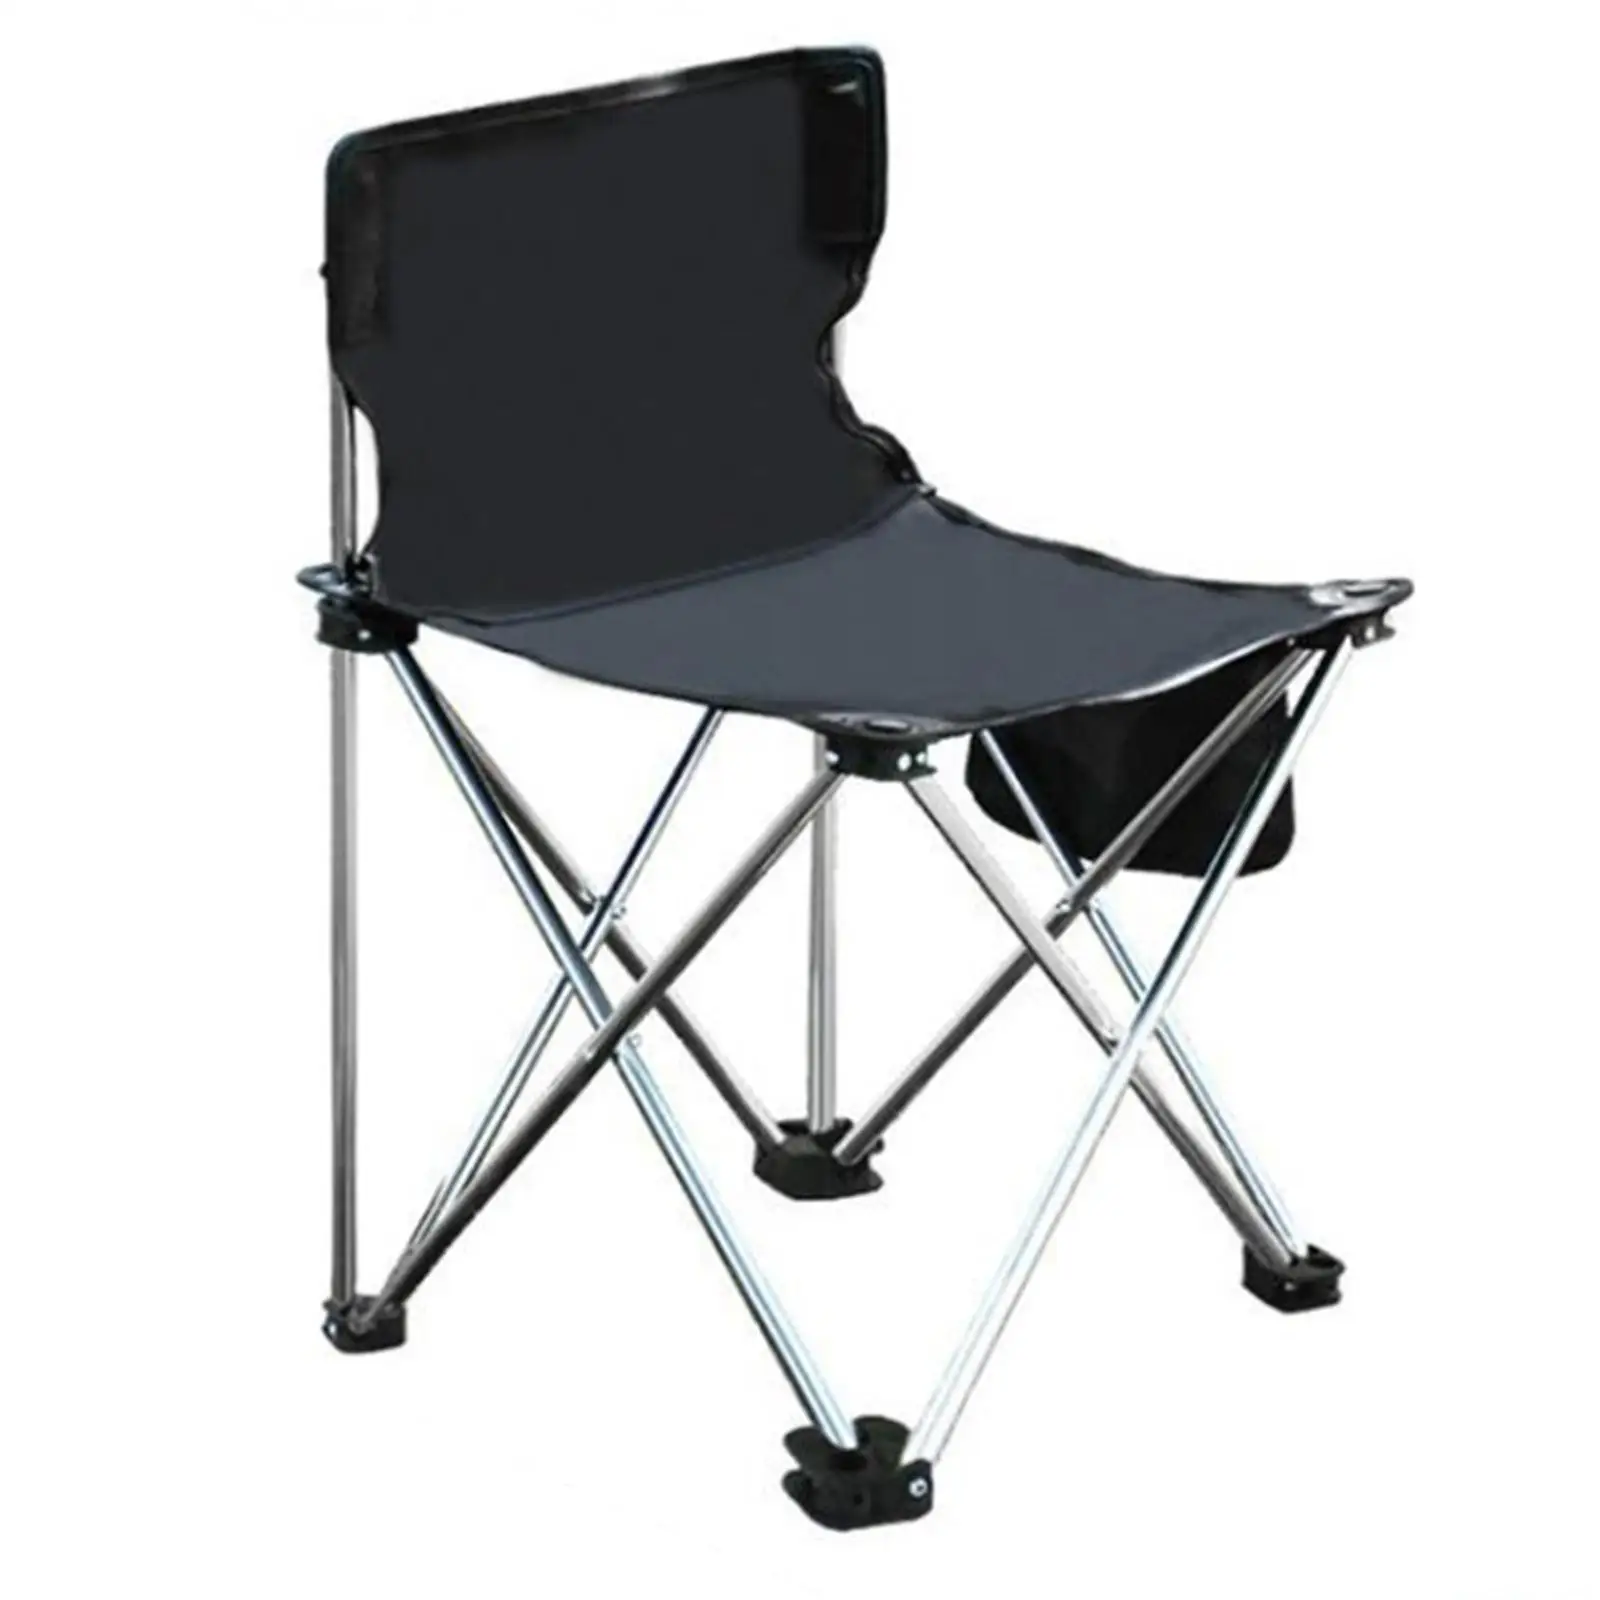 Portable Camping Chair Heavy Duty High Back Lightweight Fishing Chair Folding Chair for Backpacking Garden Hiking Fishing Patio